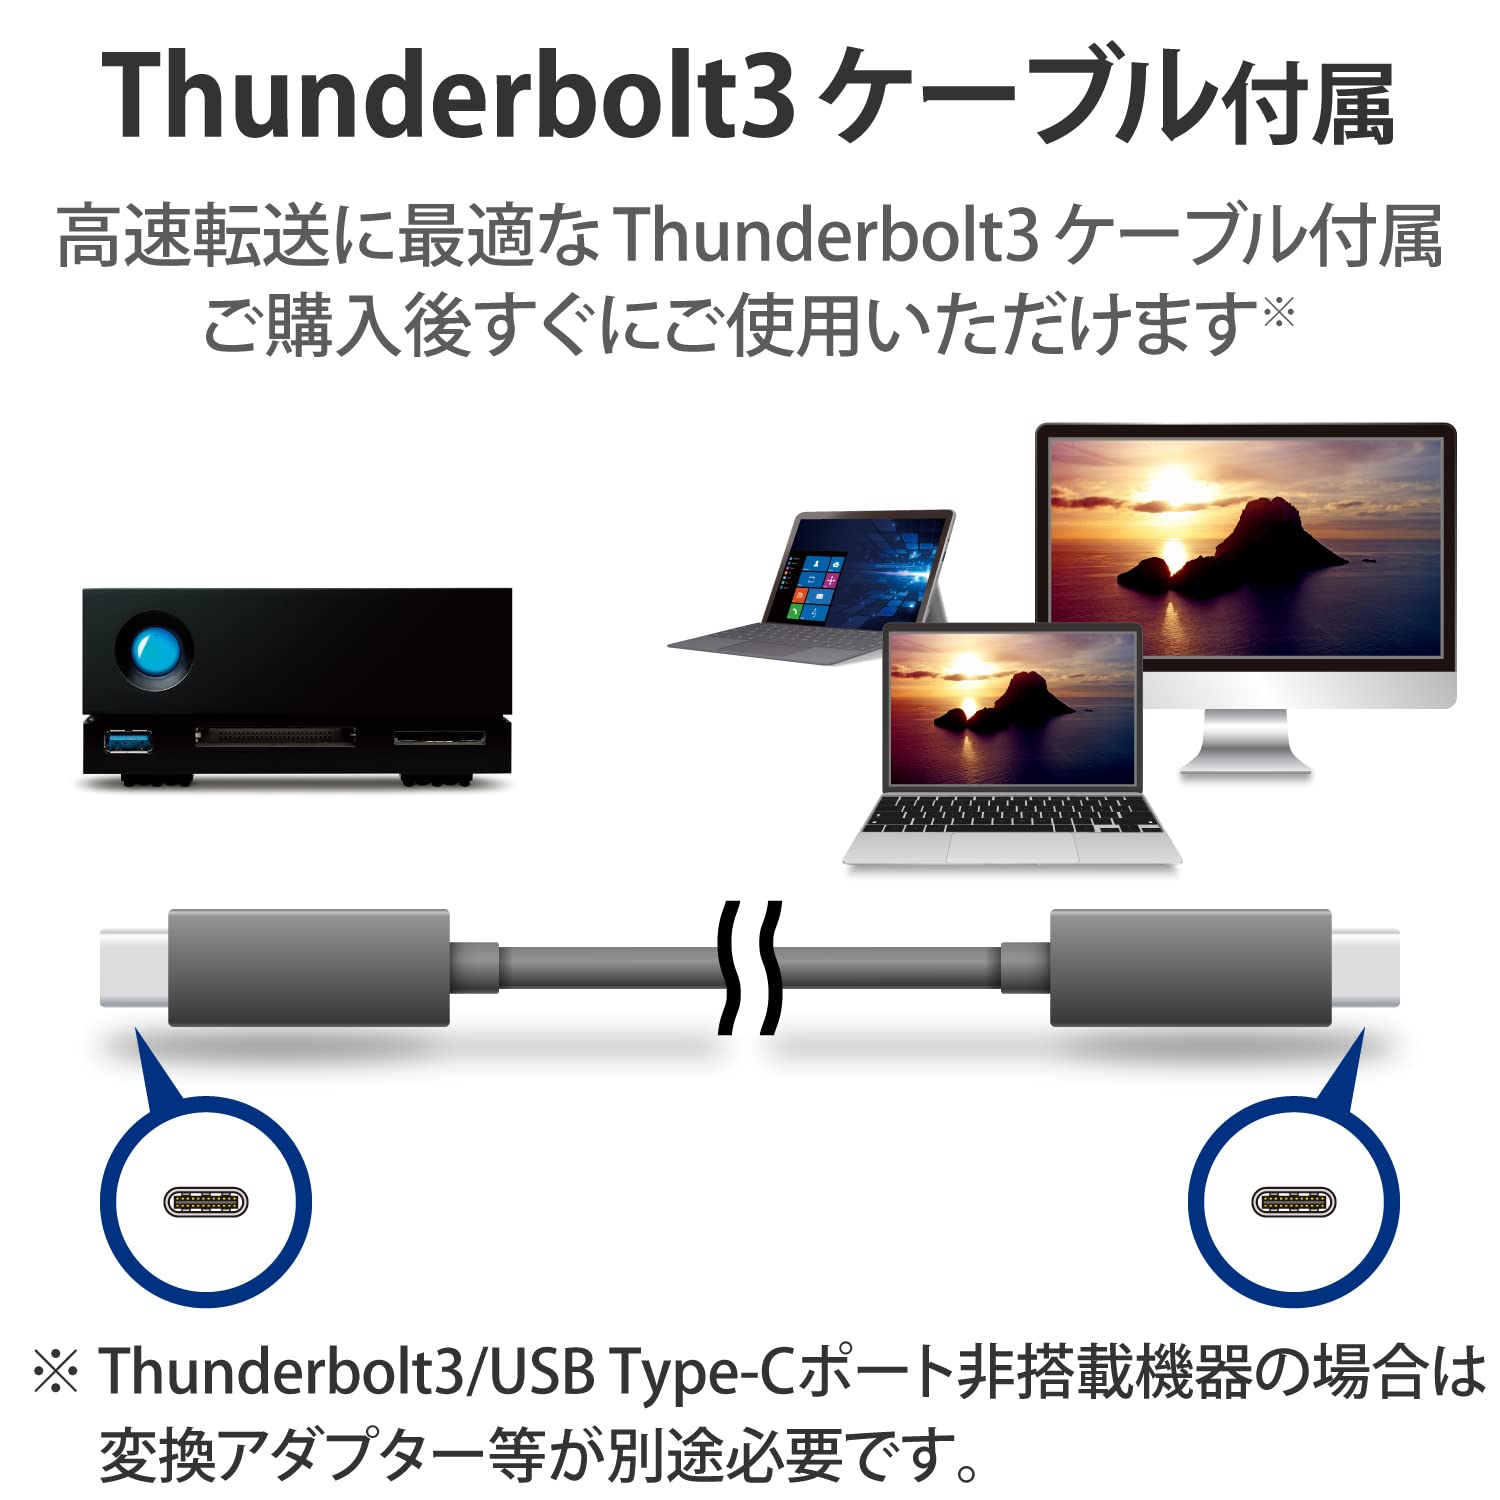 LaCie 1big Dock 18TB External Hard Drive HDD Docking Station – Thunderbolt 3 USB 3.1, 7200 RPM Enterprise Class Drives, for Mac and PC Desktop, Data Redundancy (STHS18000800)